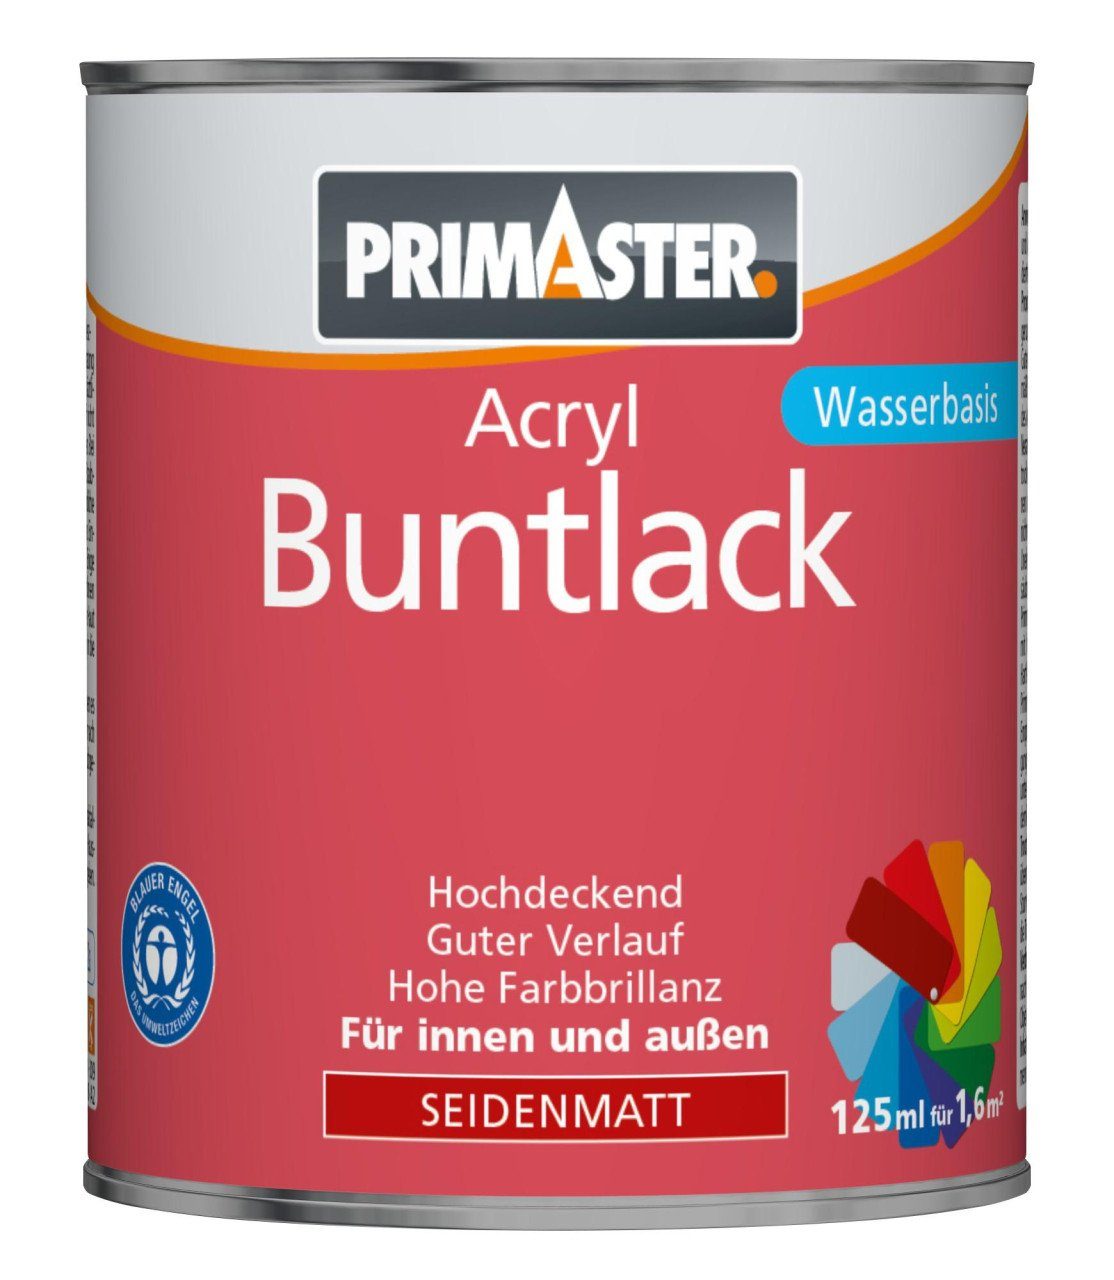 Primaster Acryl-Buntlack Primaster Acryl 125 RAL cremeweiß 9001 Buntlack ml